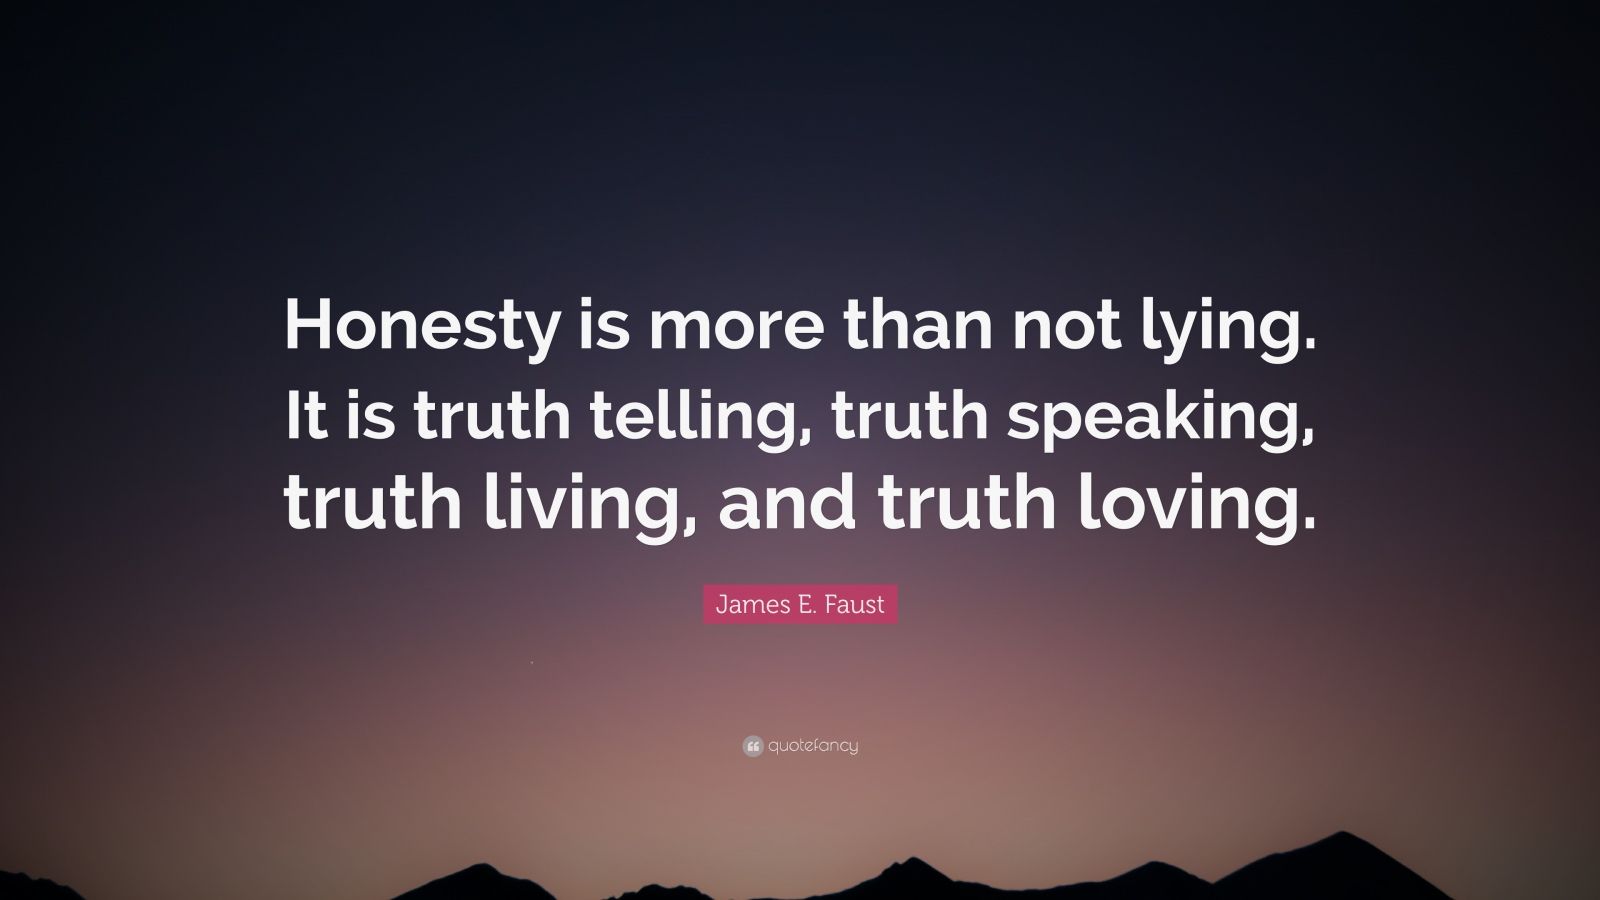 Honesty and Trust